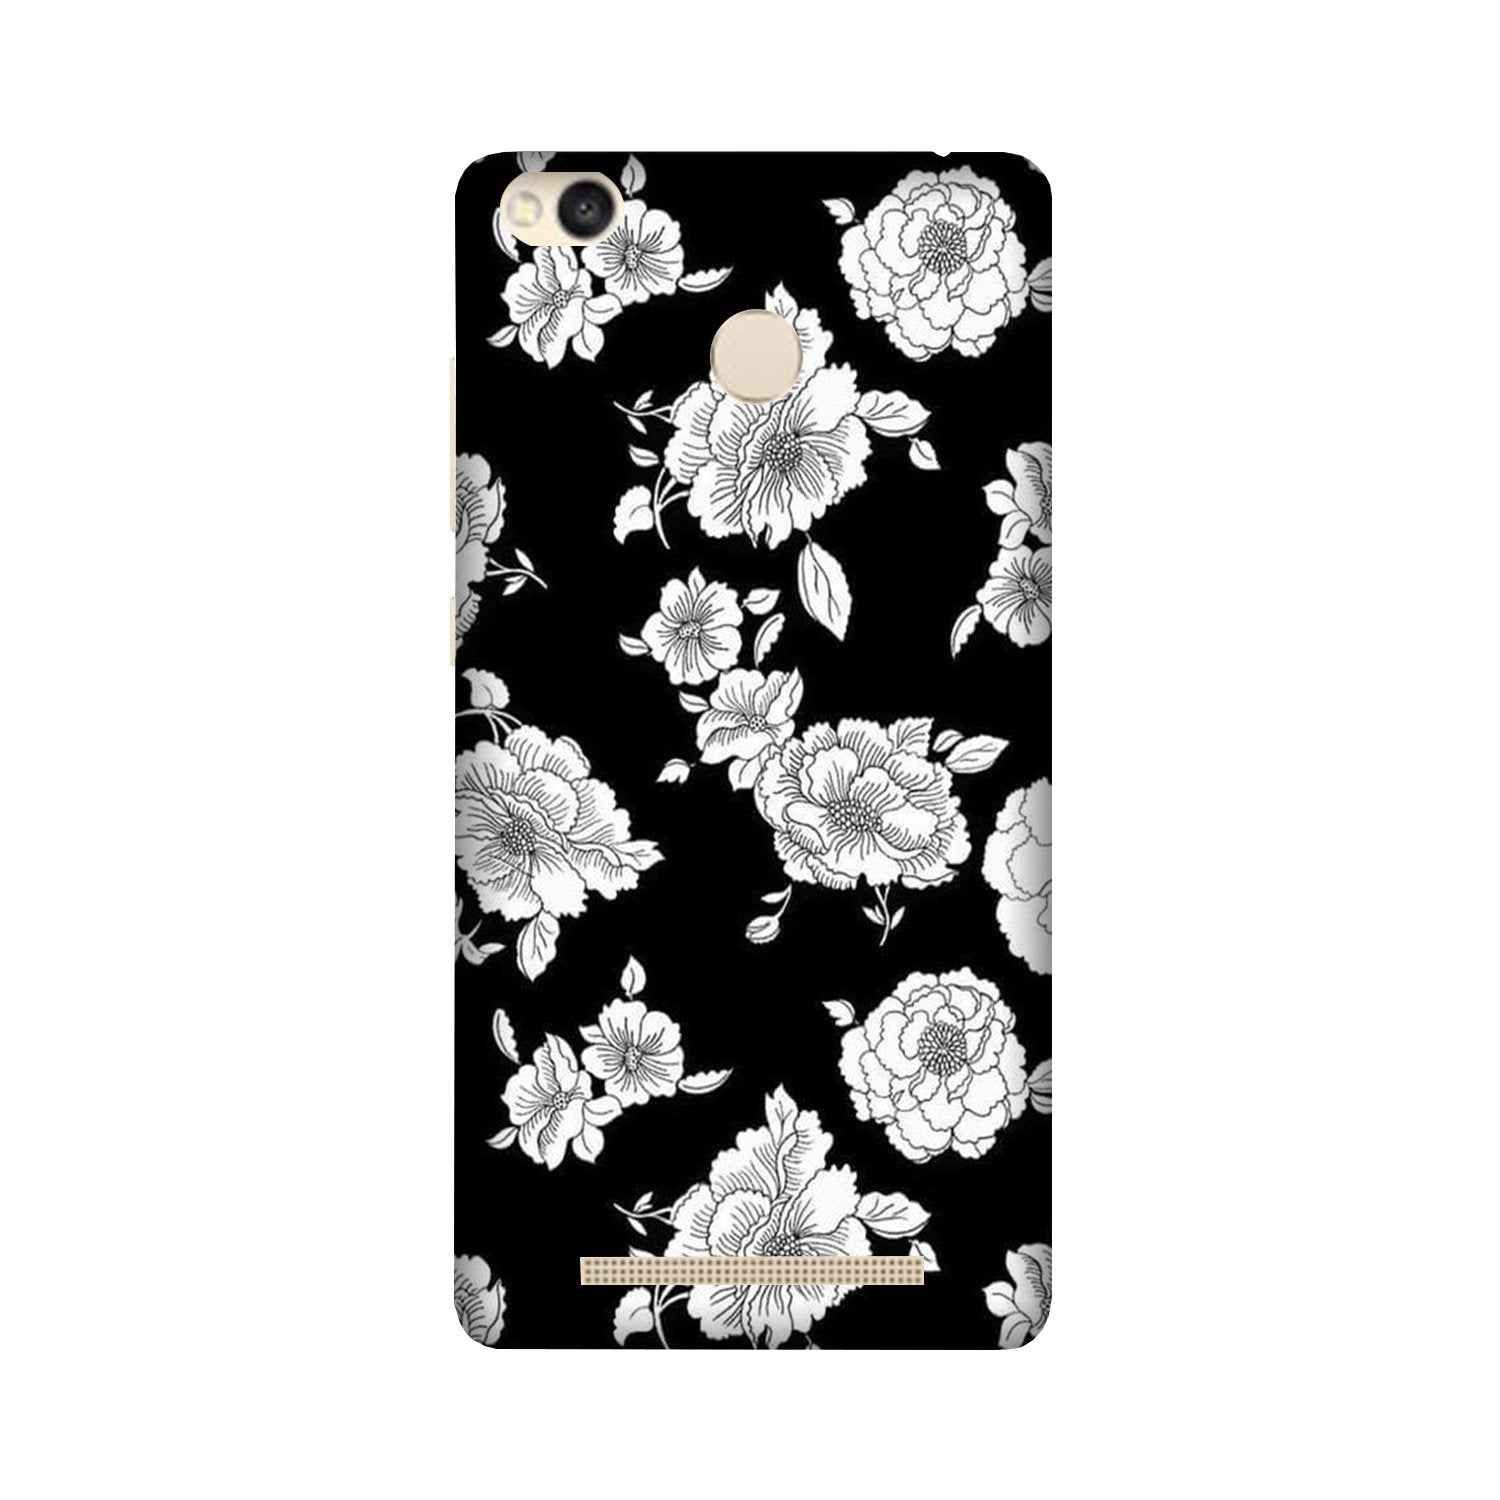 White flowers Black Background Case for Redmi 3S Prime